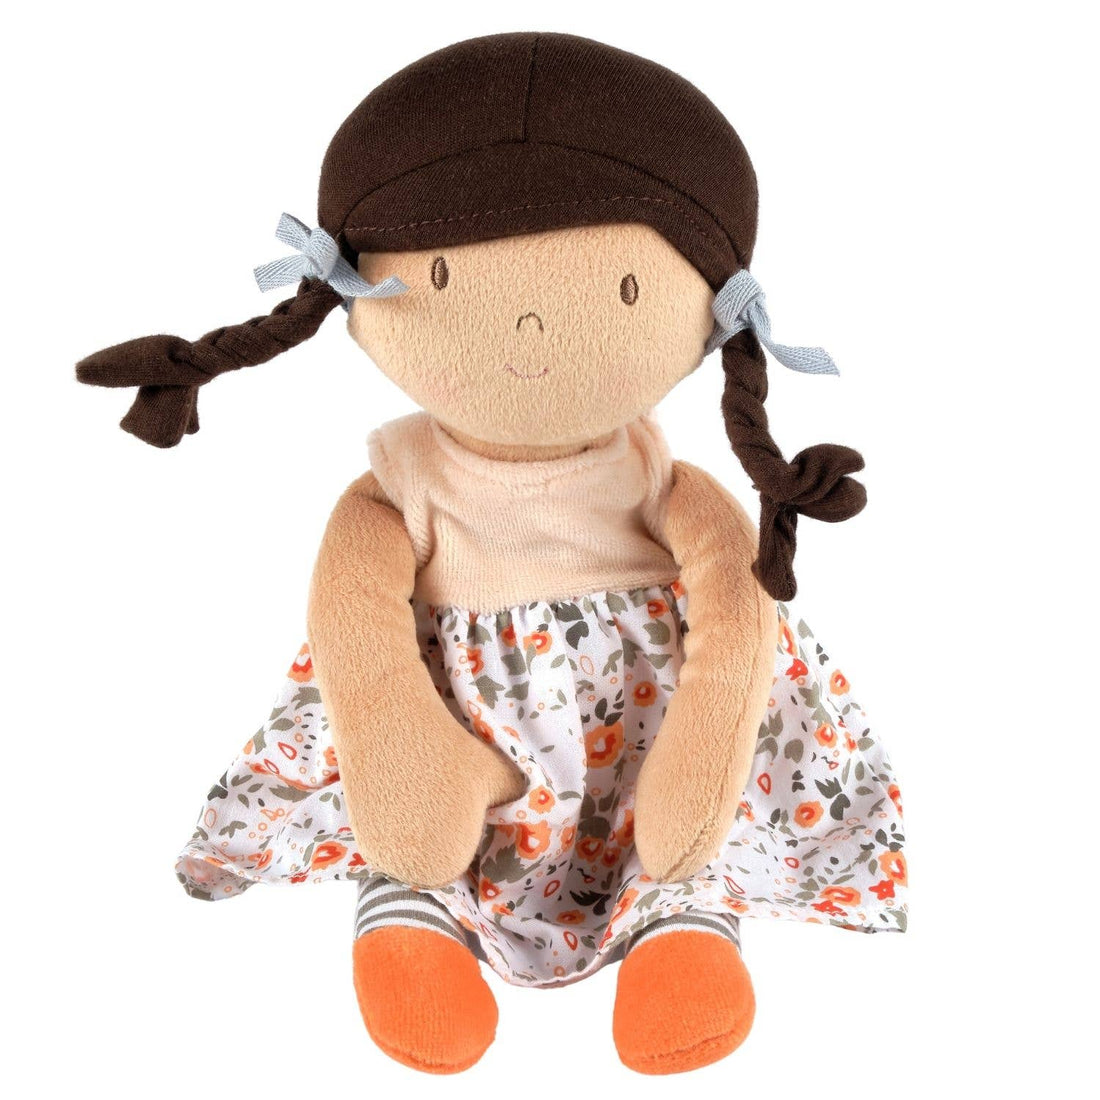 Aleah - Black Hair Doll with Heat Pack-Dolls-Tikiri Toys LLC-bluebird baby & kids